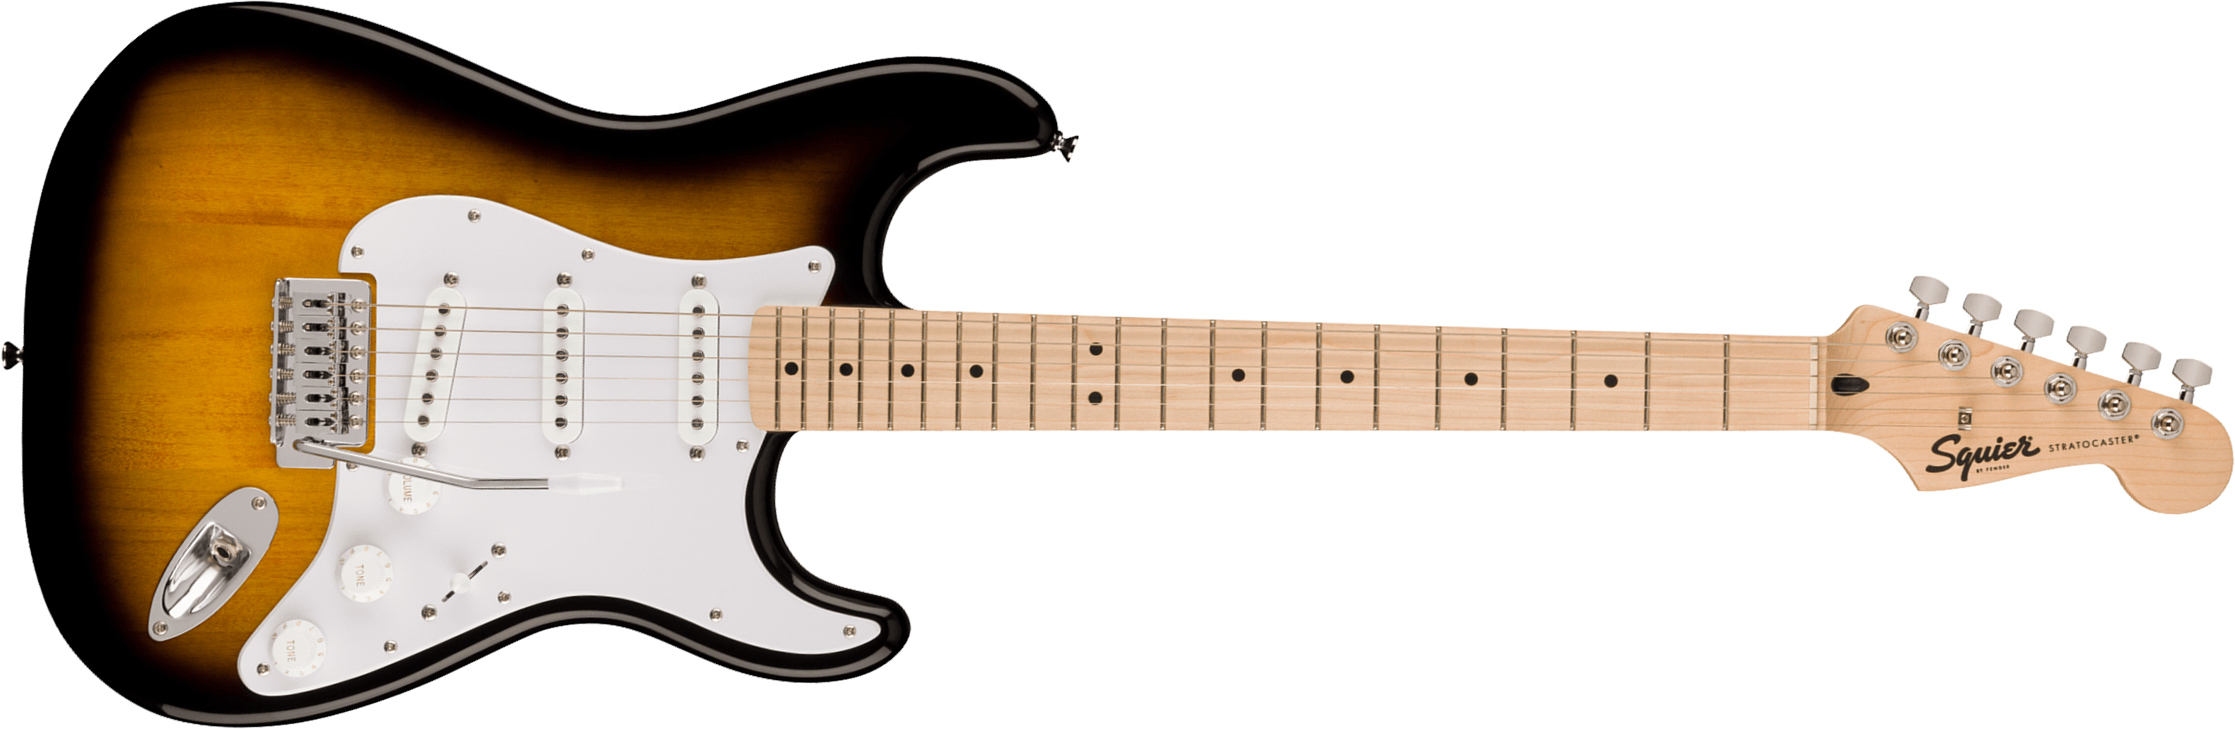 Squier Strat Sonic 3s Trem Mn - 2-color Sunburst - Elektrische gitaar in Str-vorm - Main picture